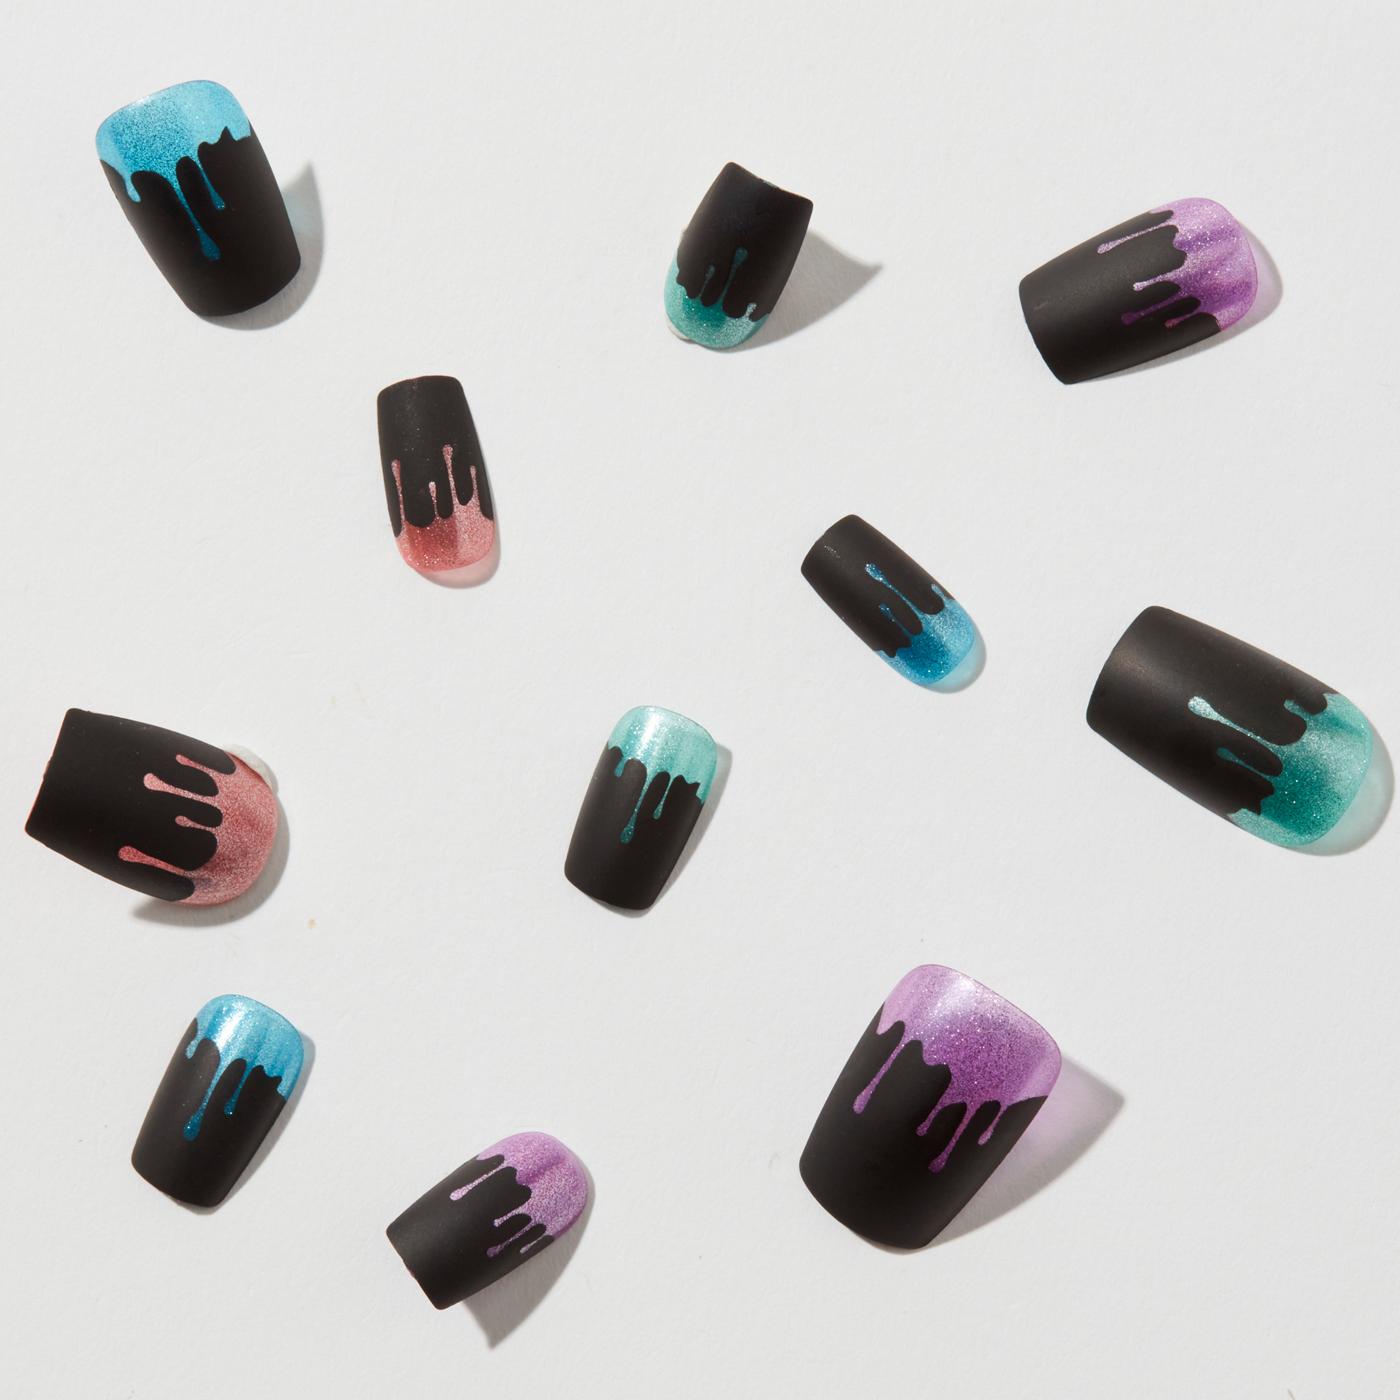 Diosa Cerriden's Spell Artificial Nails - Glitter Matte Black; image 3 of 3